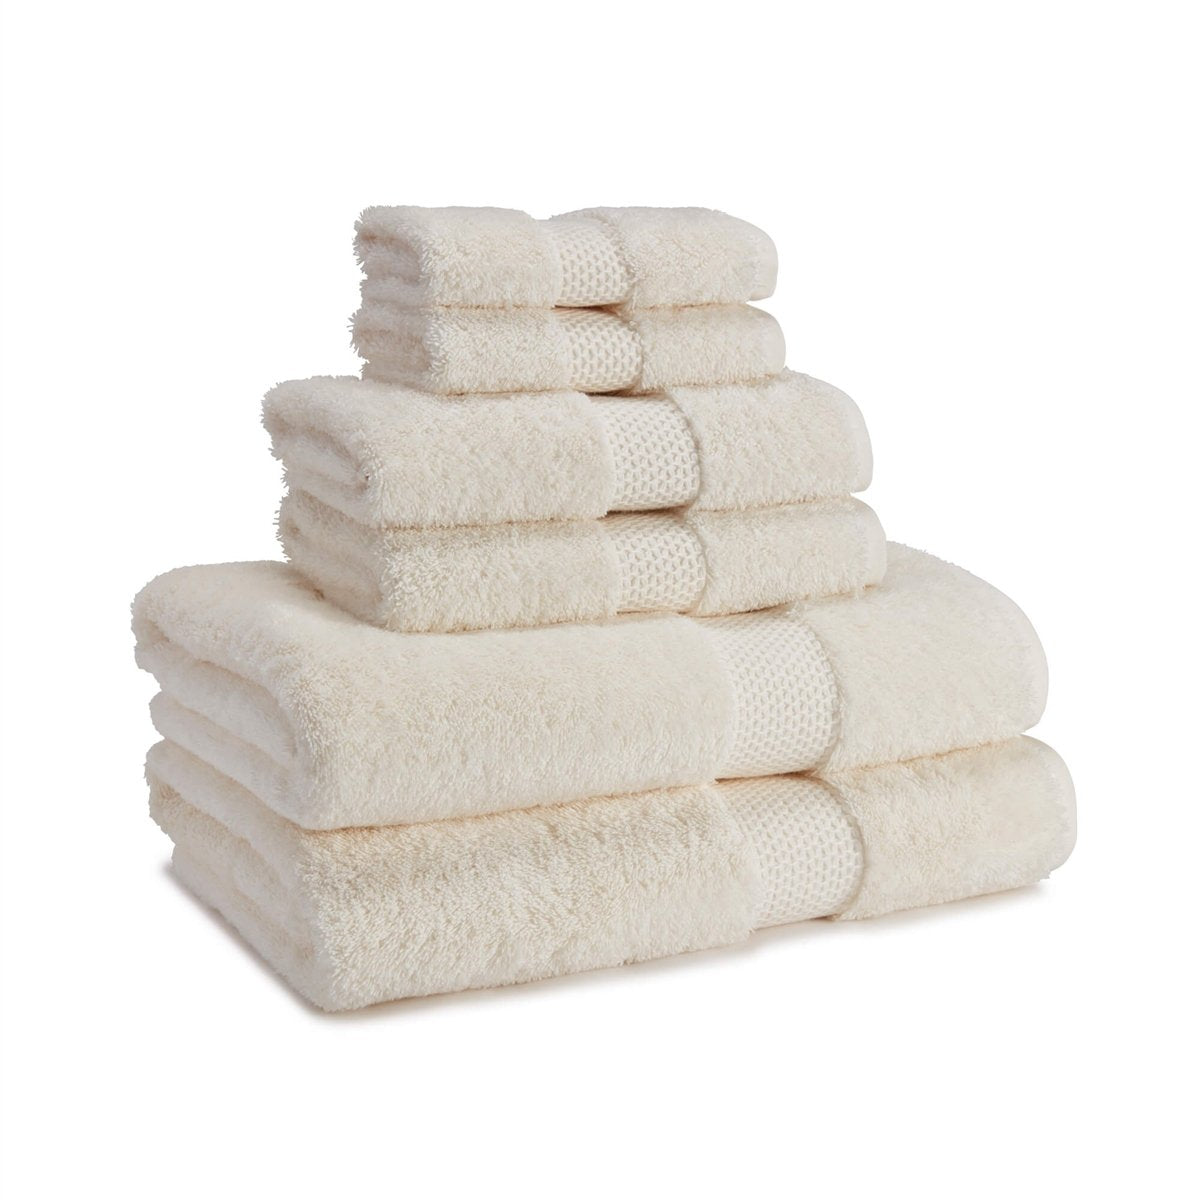 Meshech Bath Towels